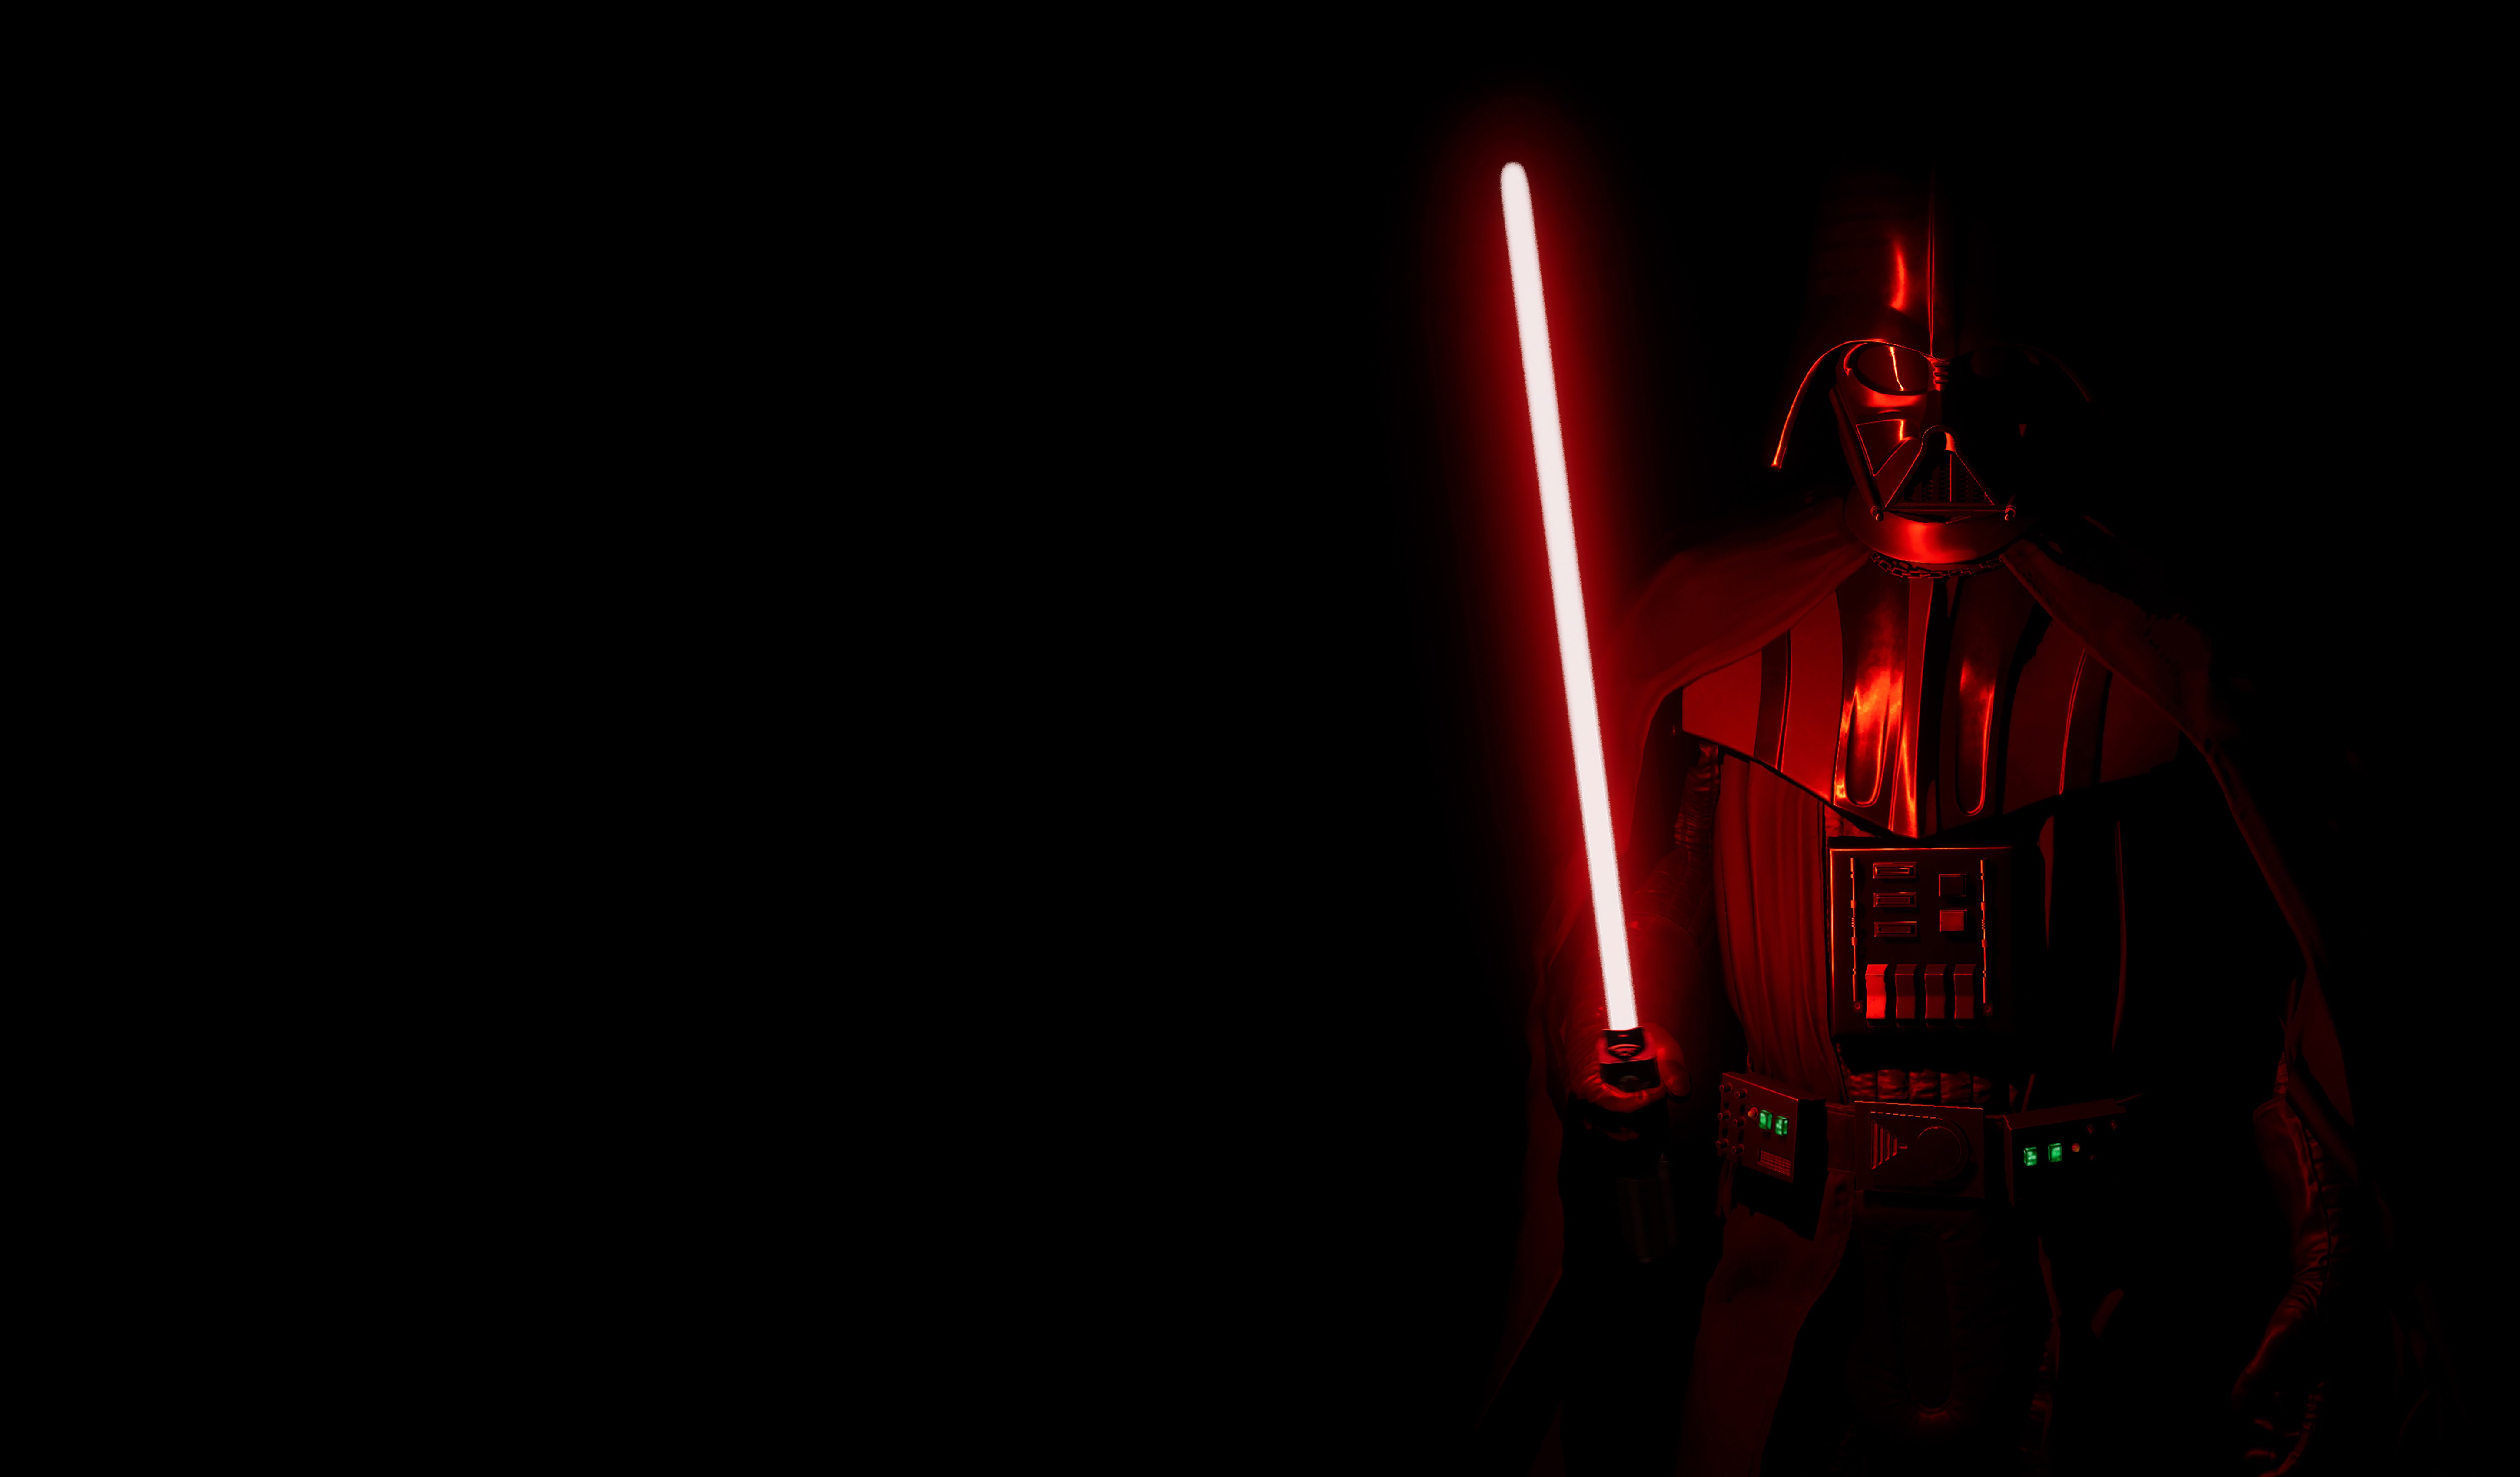 Darth Vader Wallpaper Star Wars 4K - Also explore thousands of